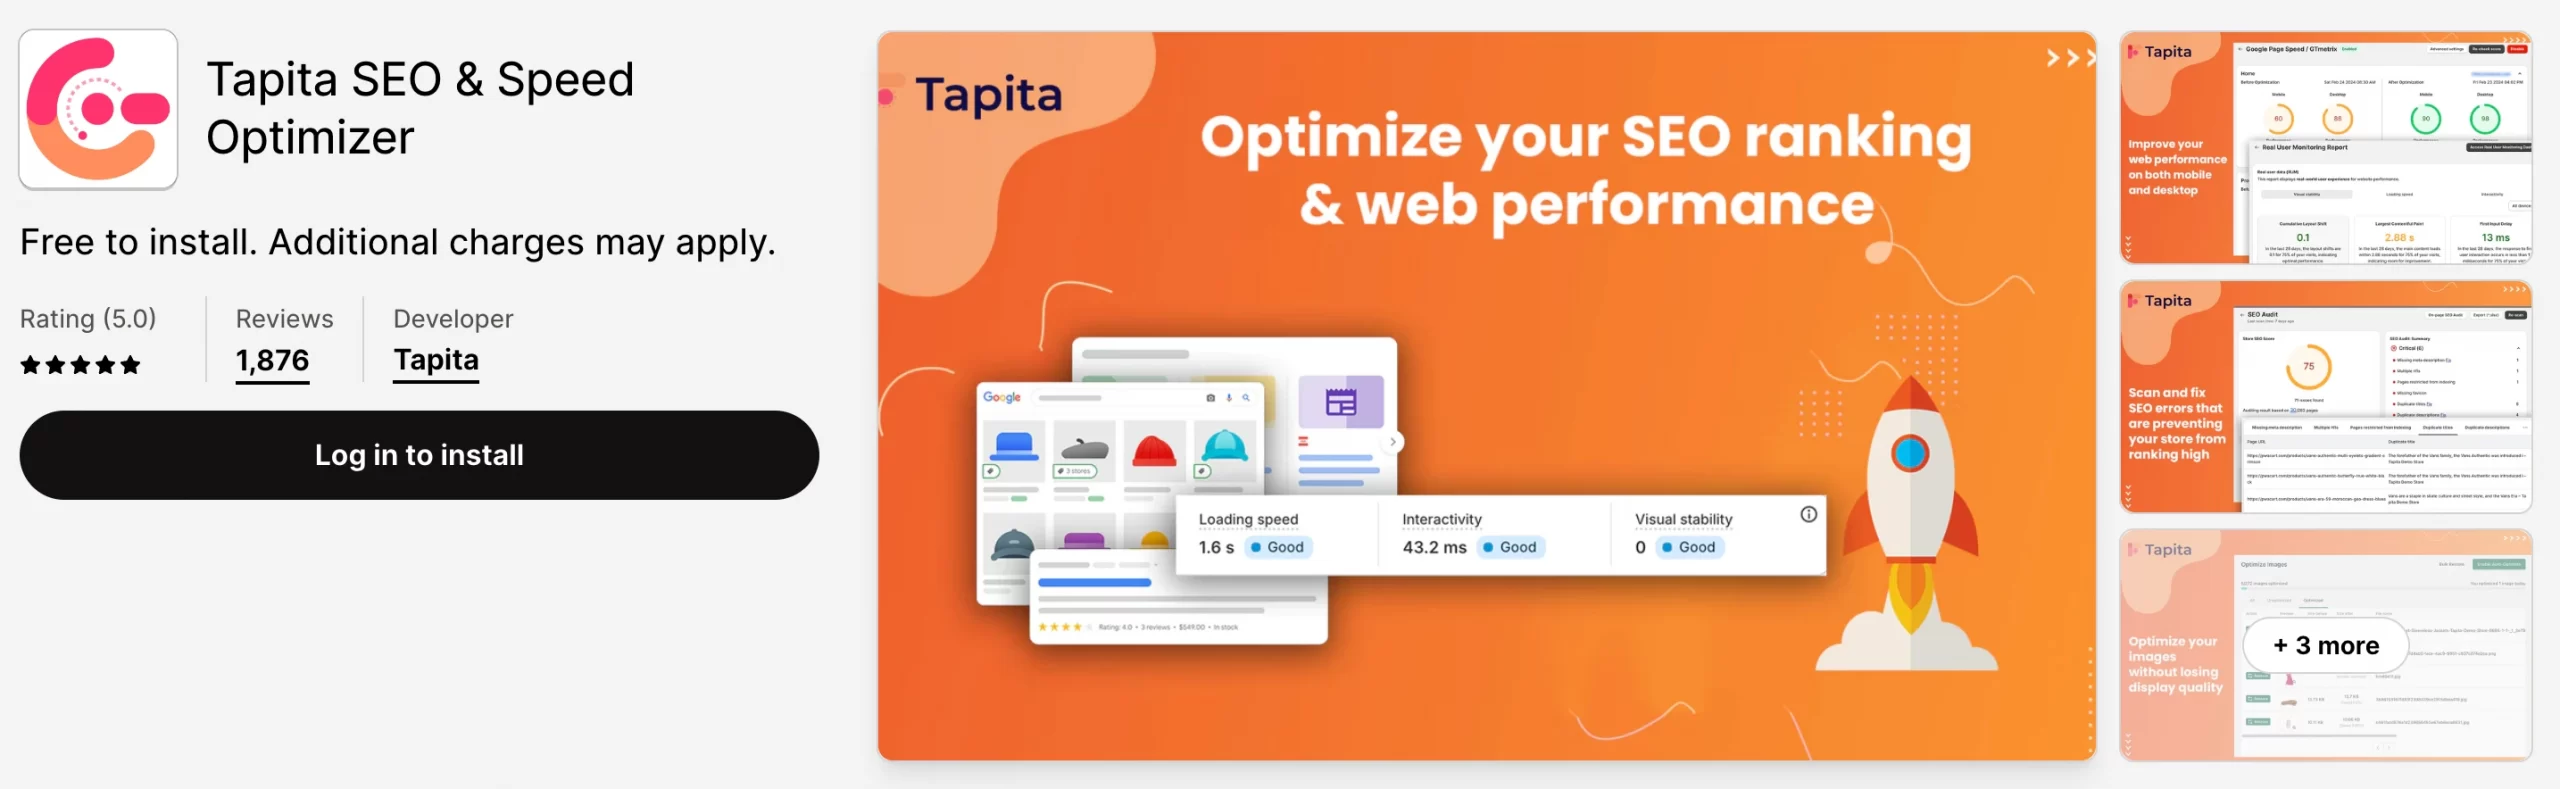 tapita seo and speed optimizer